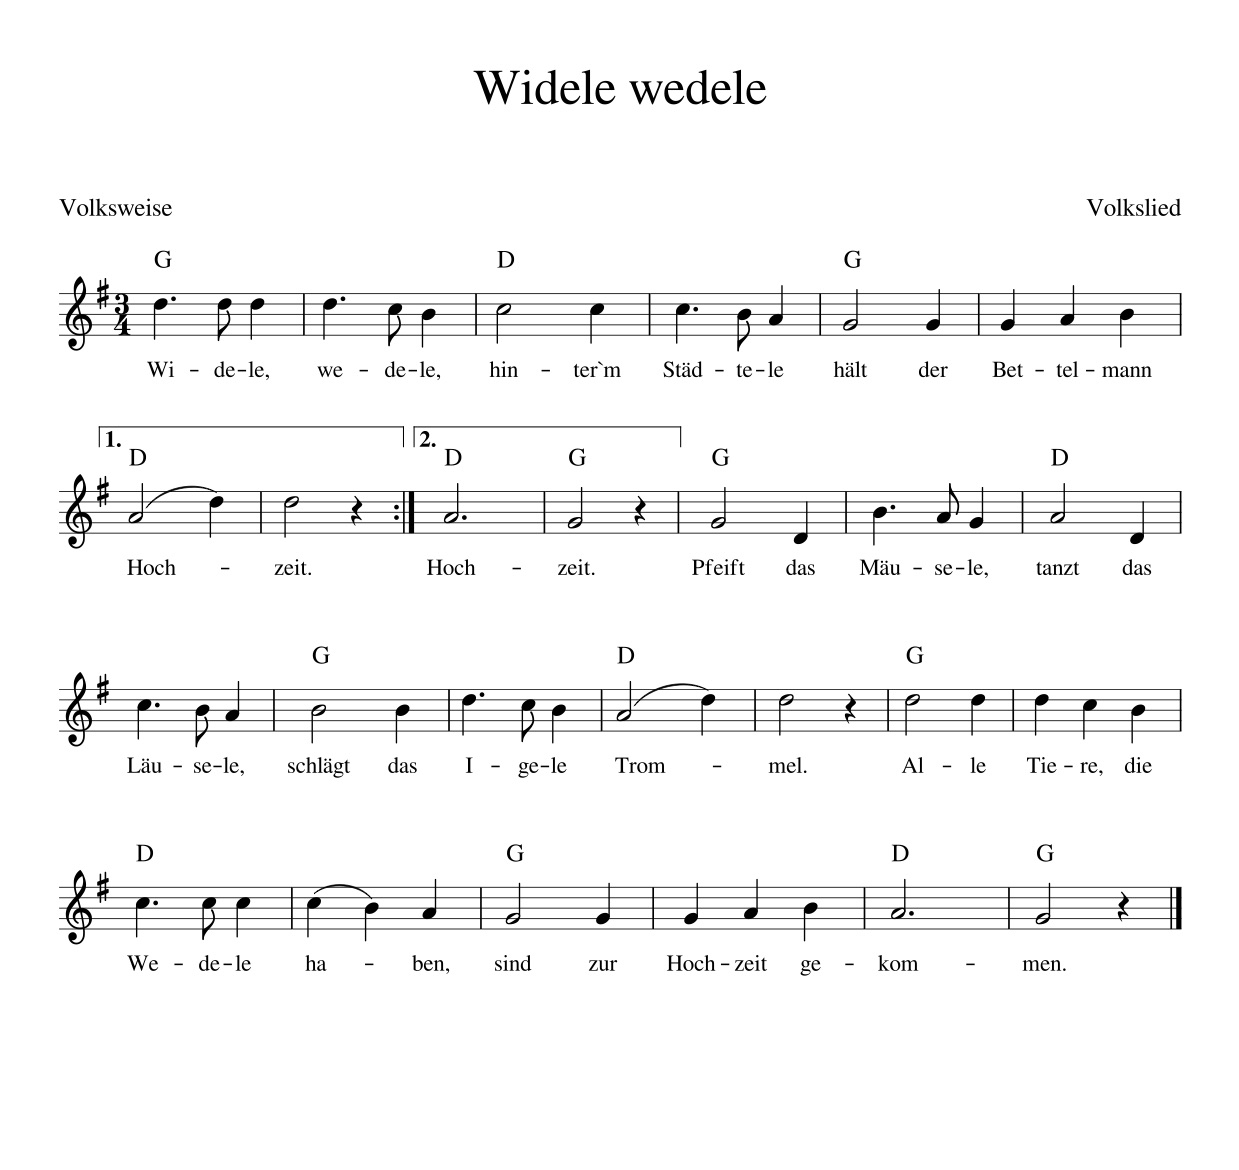 Widele_wedele